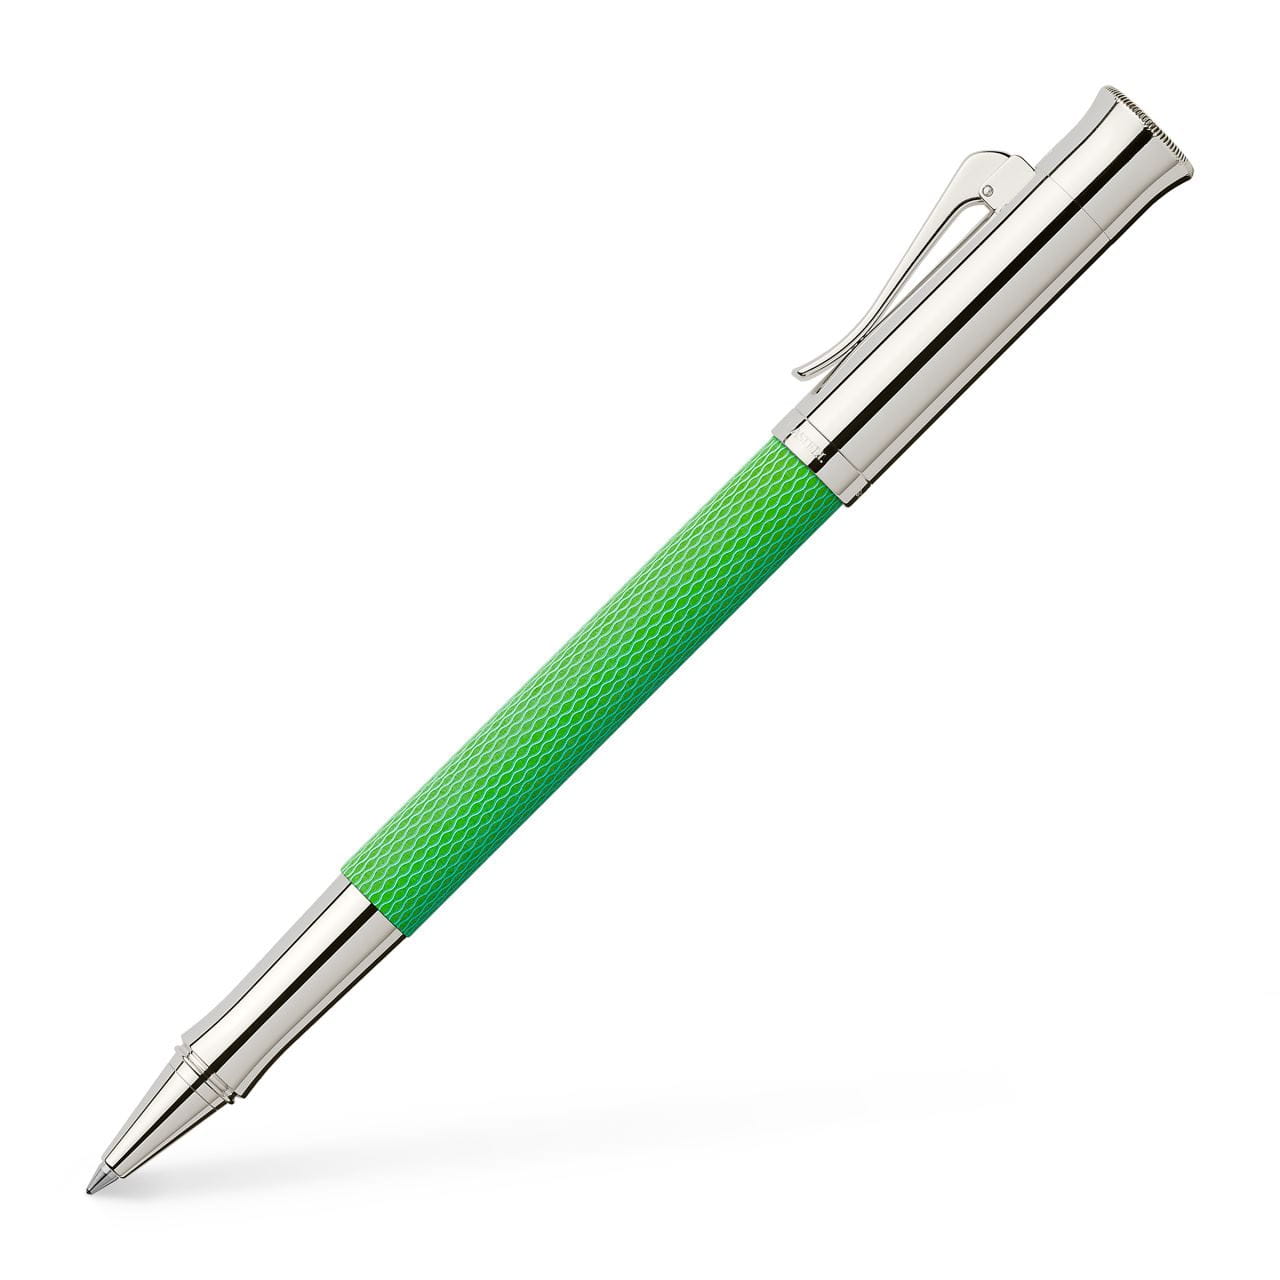 Graf-von-Faber-Castell - Rollerball pen Guilloche Viper Green